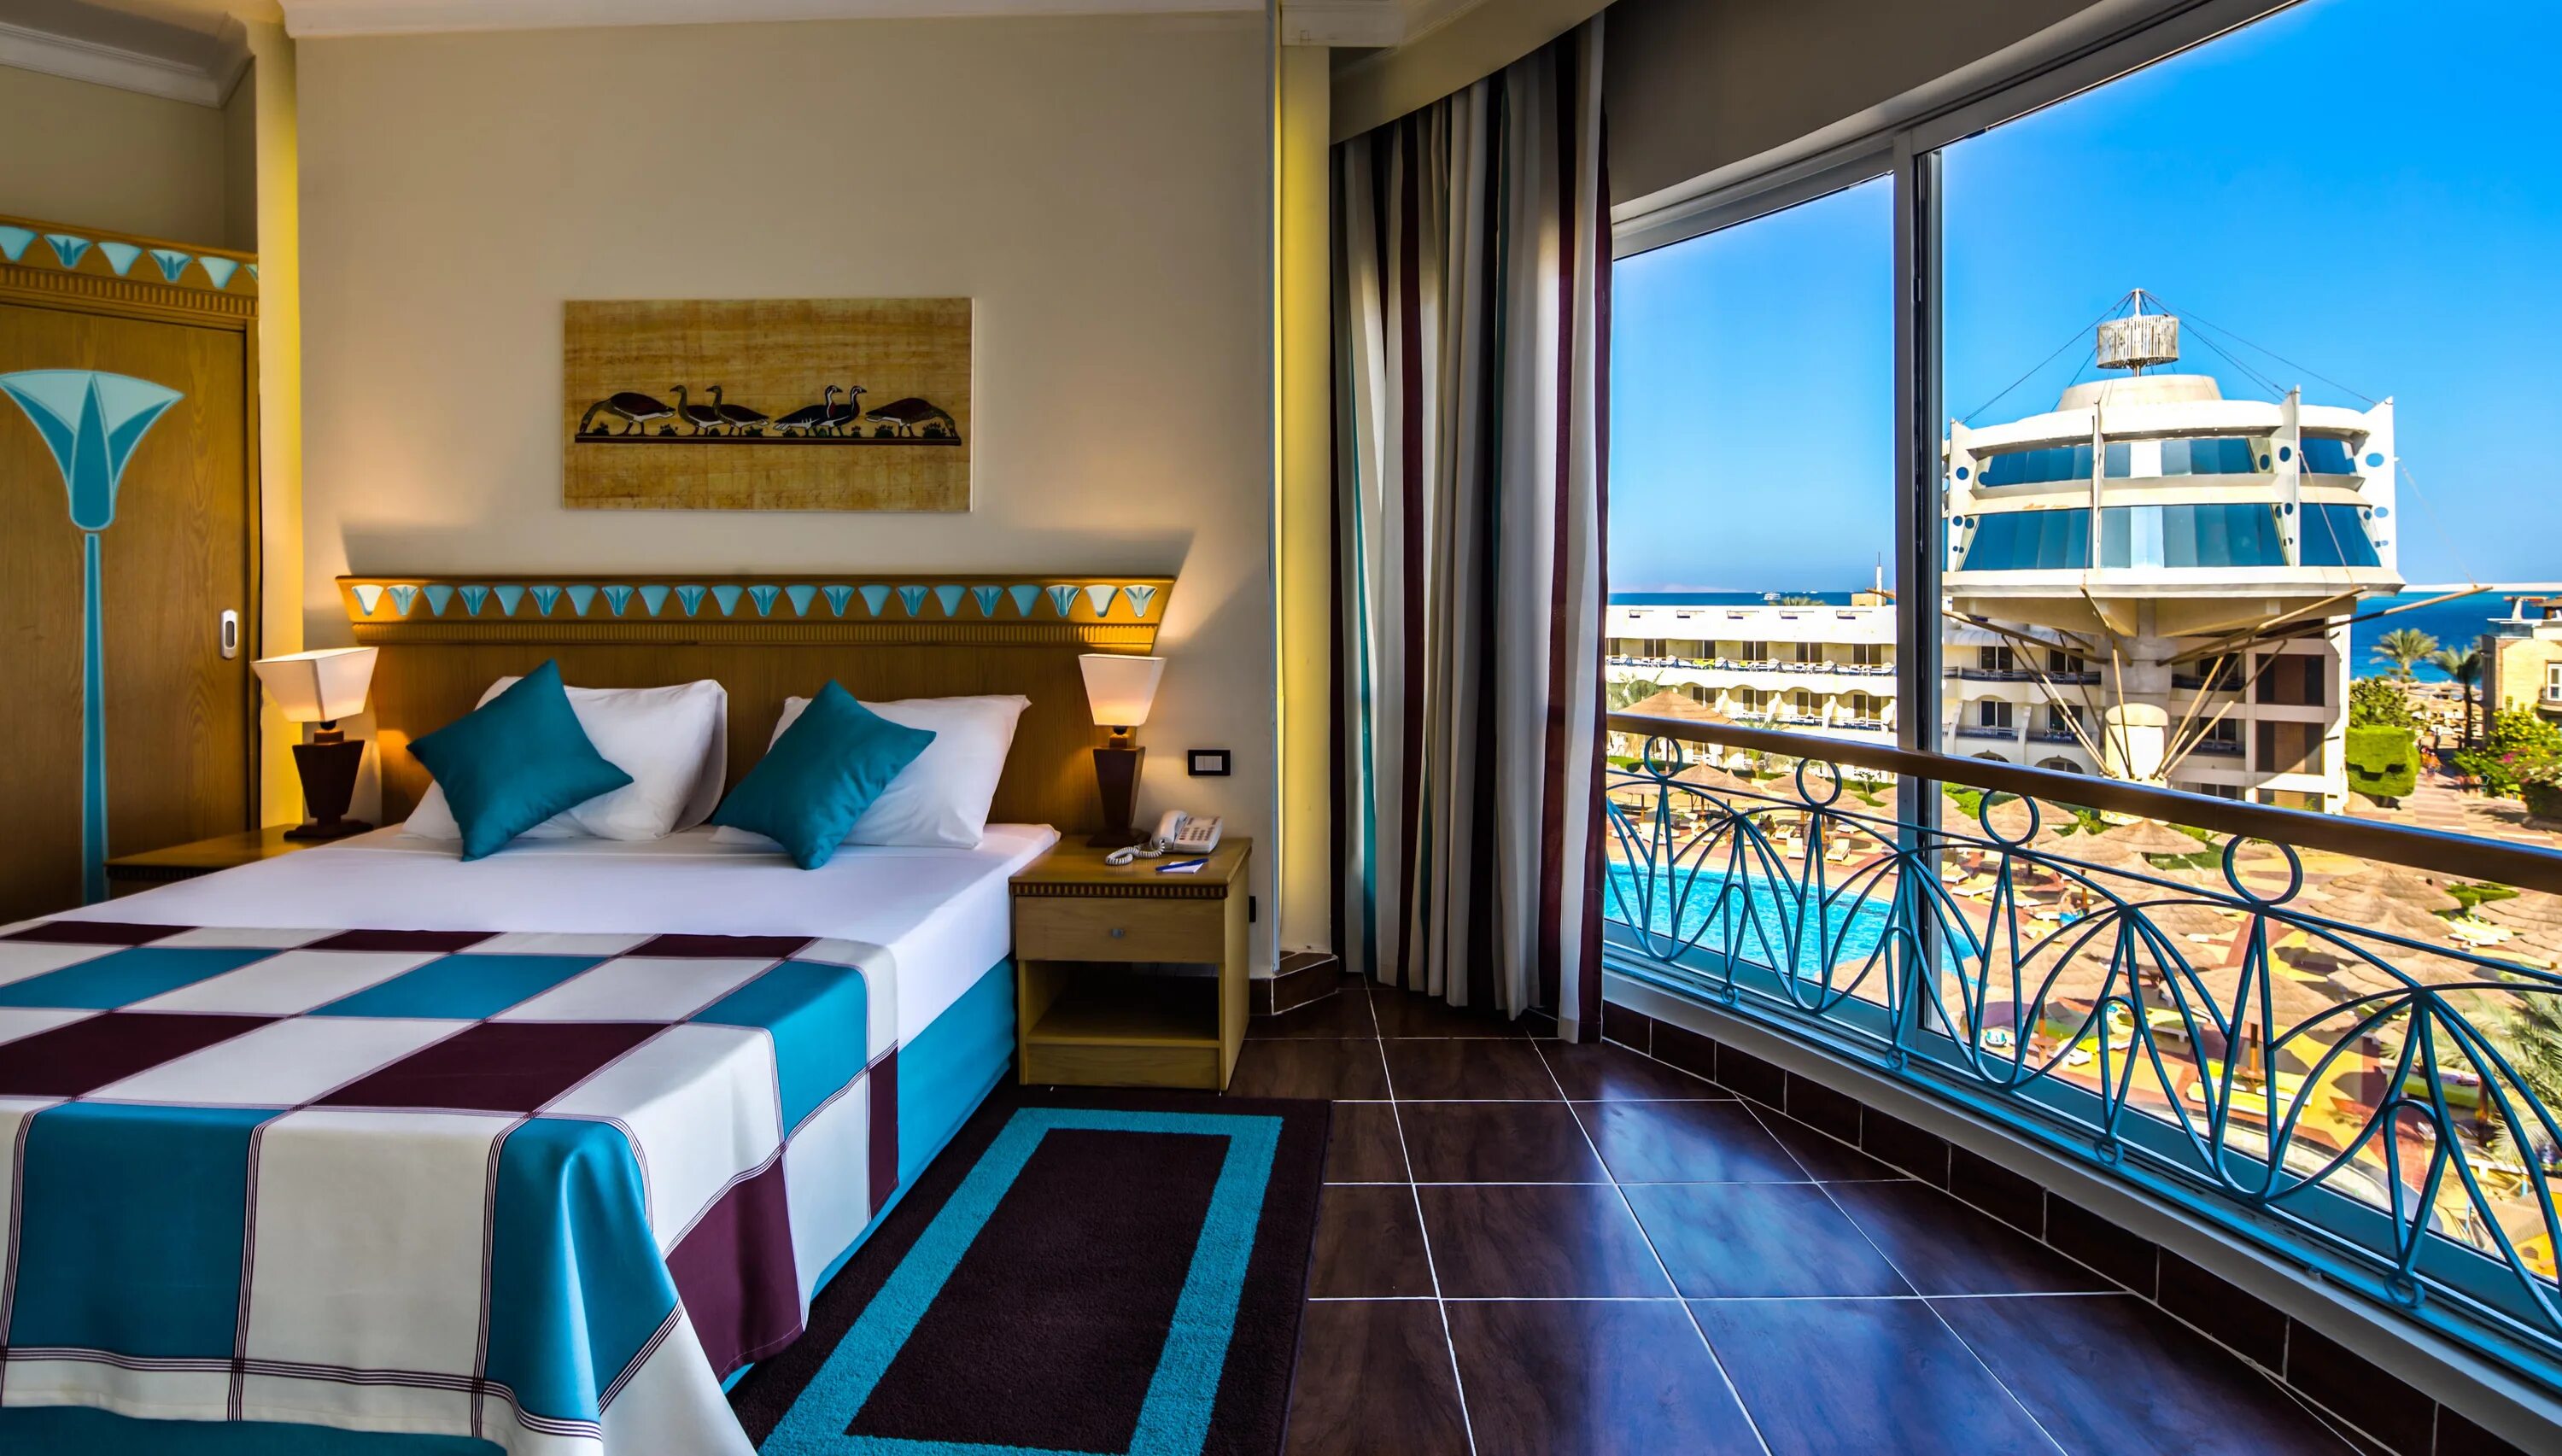 Отель sea beach. Sea Gull Hotel 4 Египет. Сигал Бич Резорт 4 Хургада. Отель Seagull Beach Resort 4*. Отель Sea Gull Beach Resort & Club 4*.